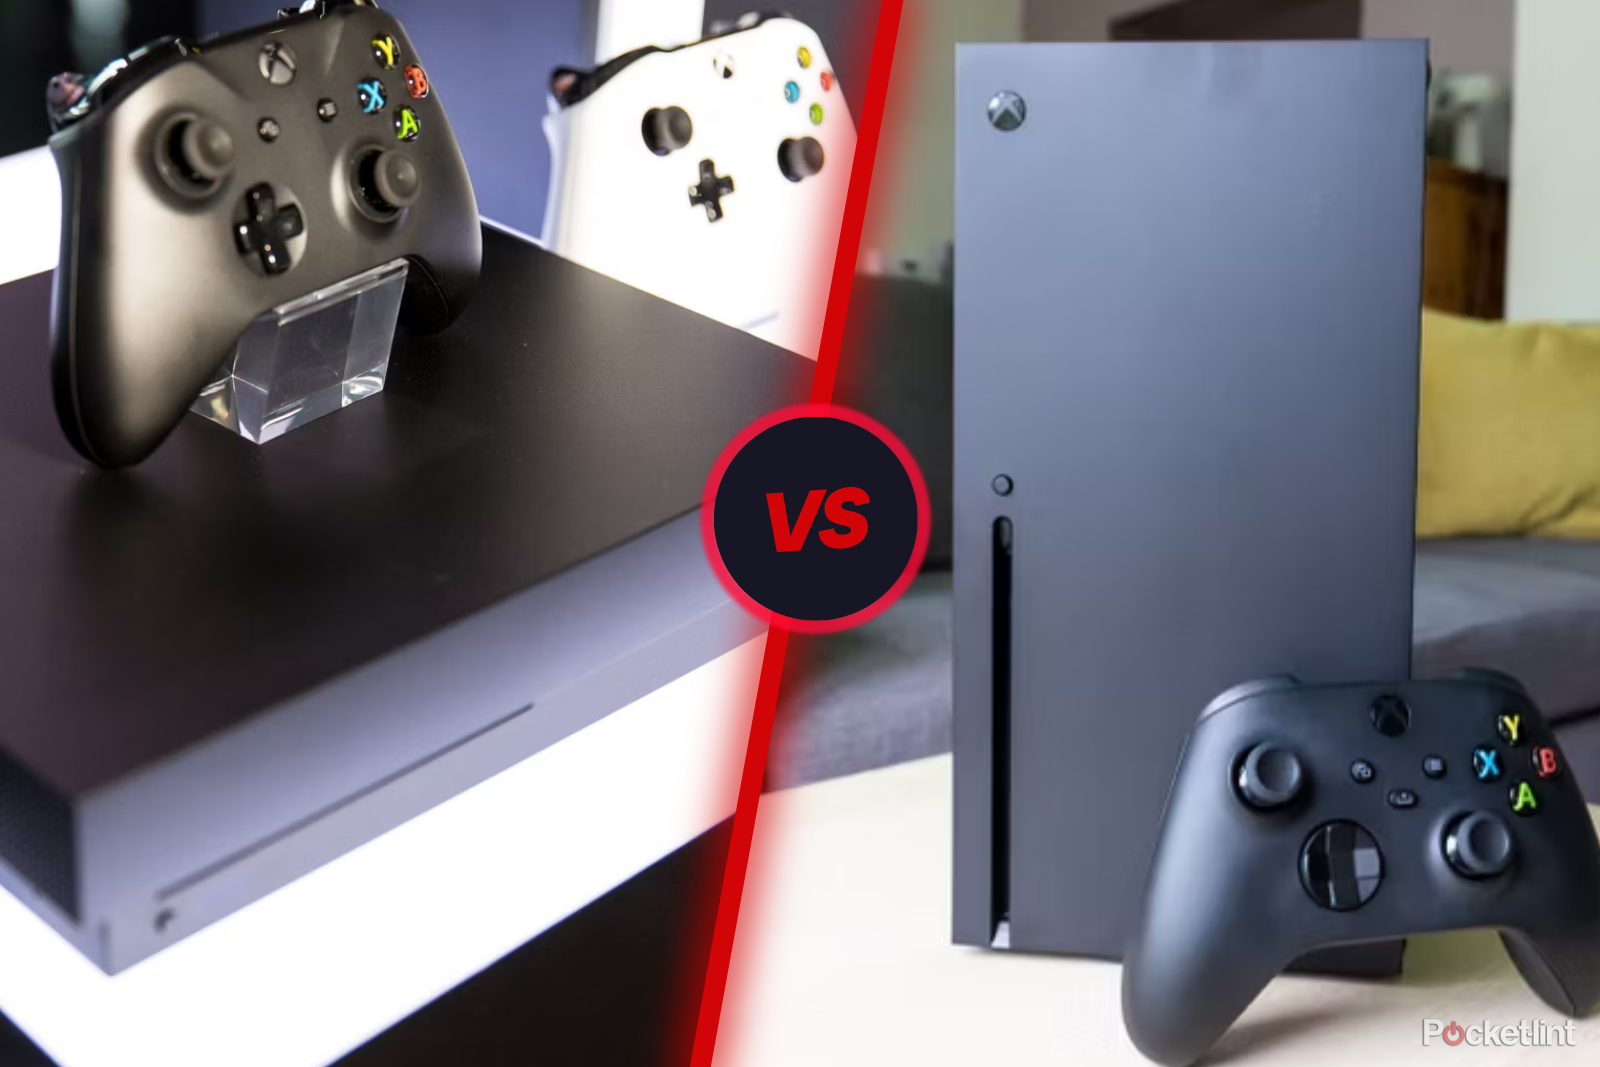 Xbox Series X load times vs. Xbox One X vs. Xbox Series S vs. Xbox One -  CNET